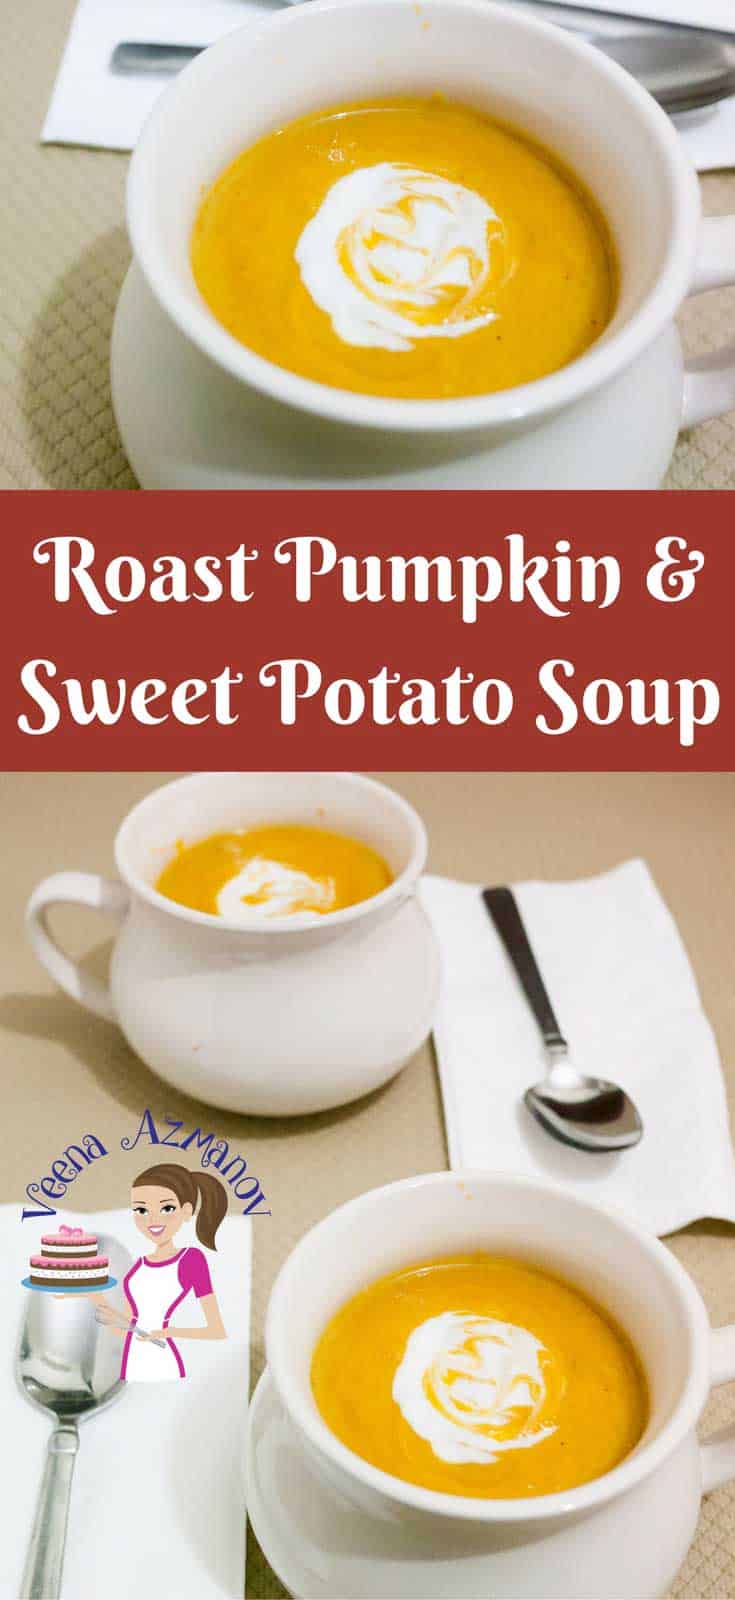 Roast Pumpkin Sweet Potato Soup - Veena Azmanov